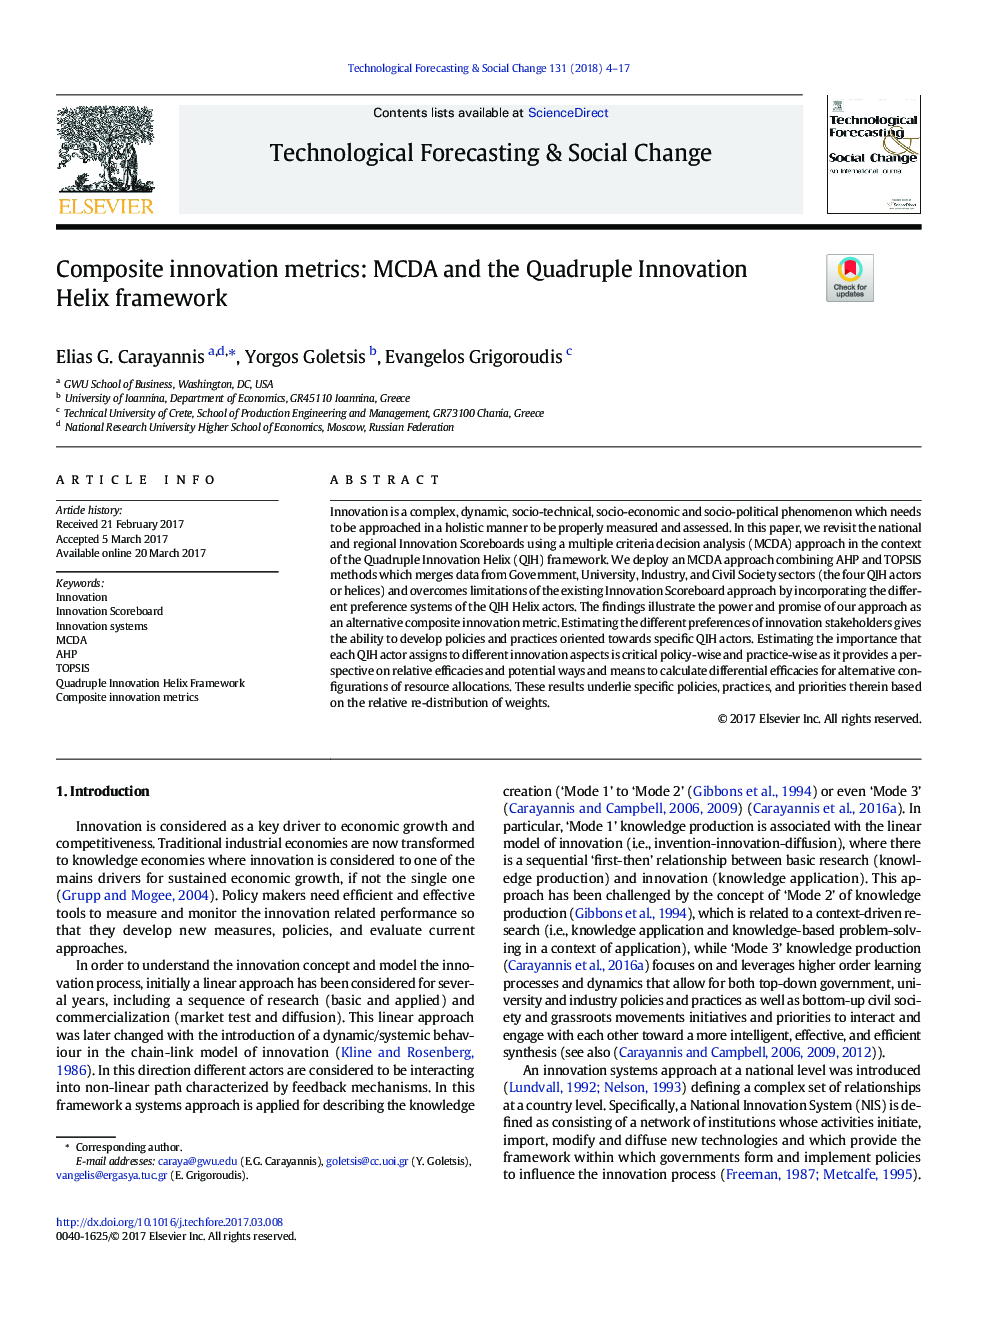 Composite innovation metrics: MCDA and the Quadruple Innovation Helix framework